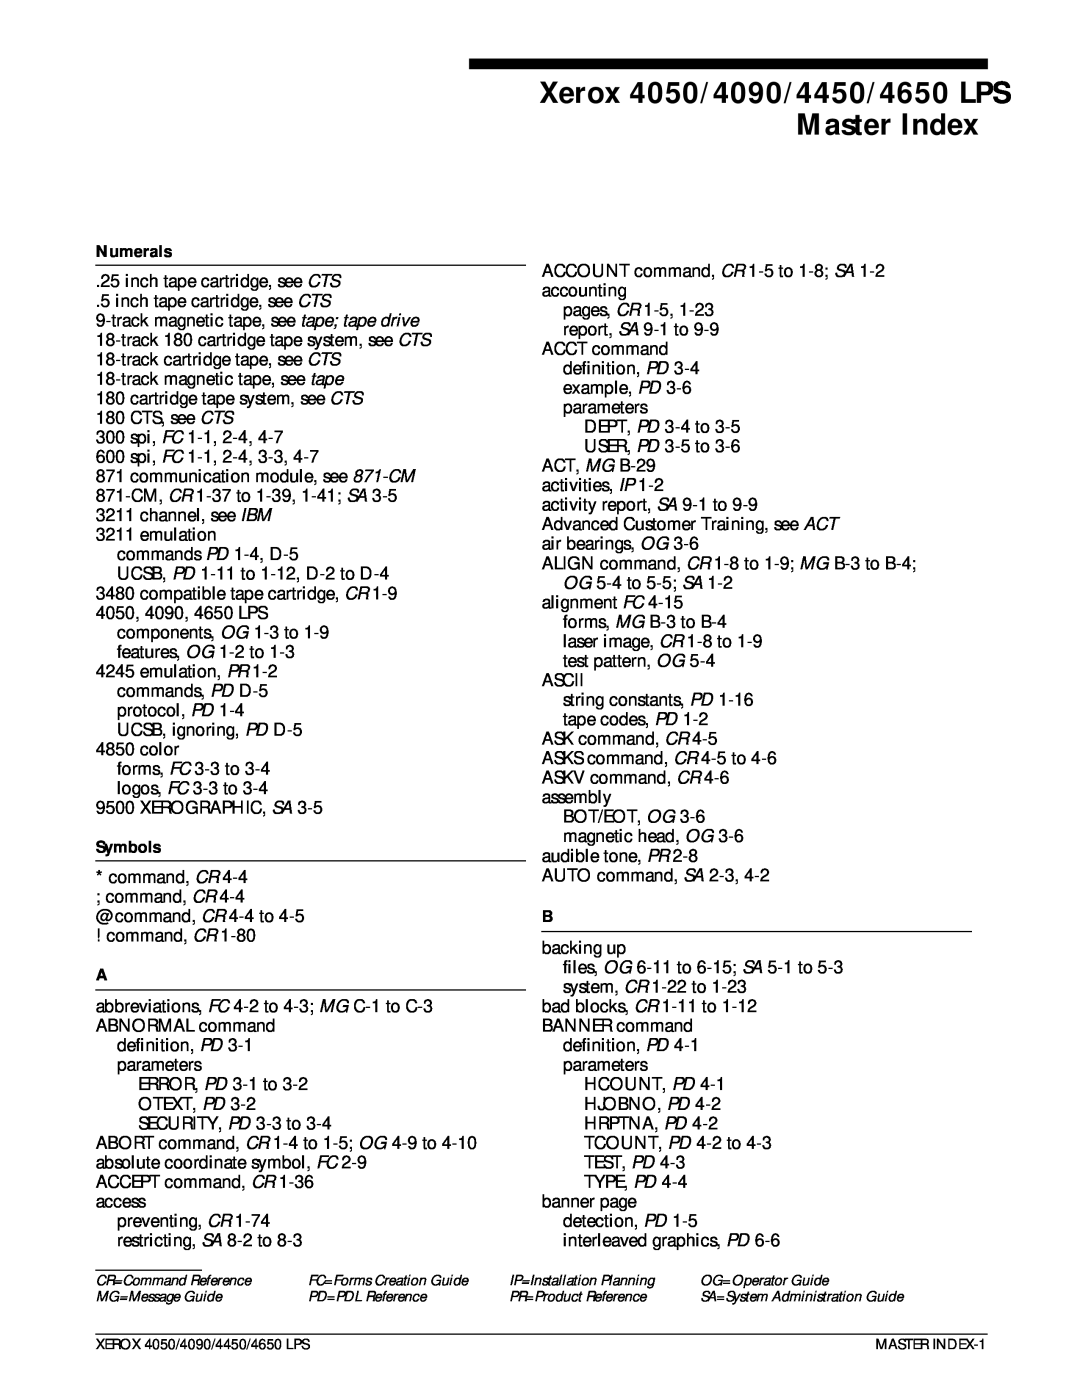 Xerox manual Numerals, Symbols, Xerox 4050/4090/4450/4650 LPS Master Index 